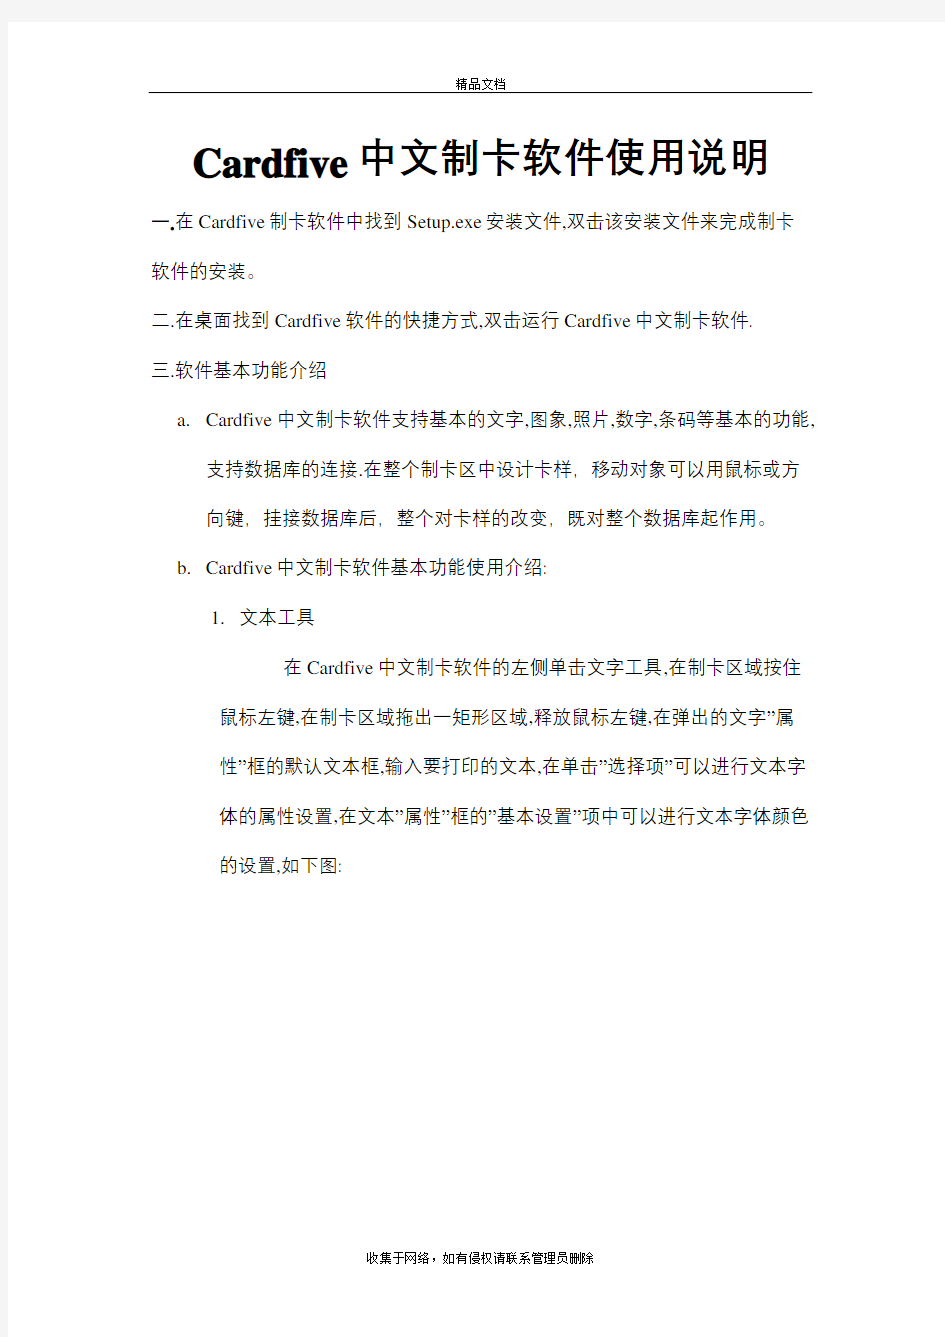 Cardfive中文制卡软件使用说明教学文稿